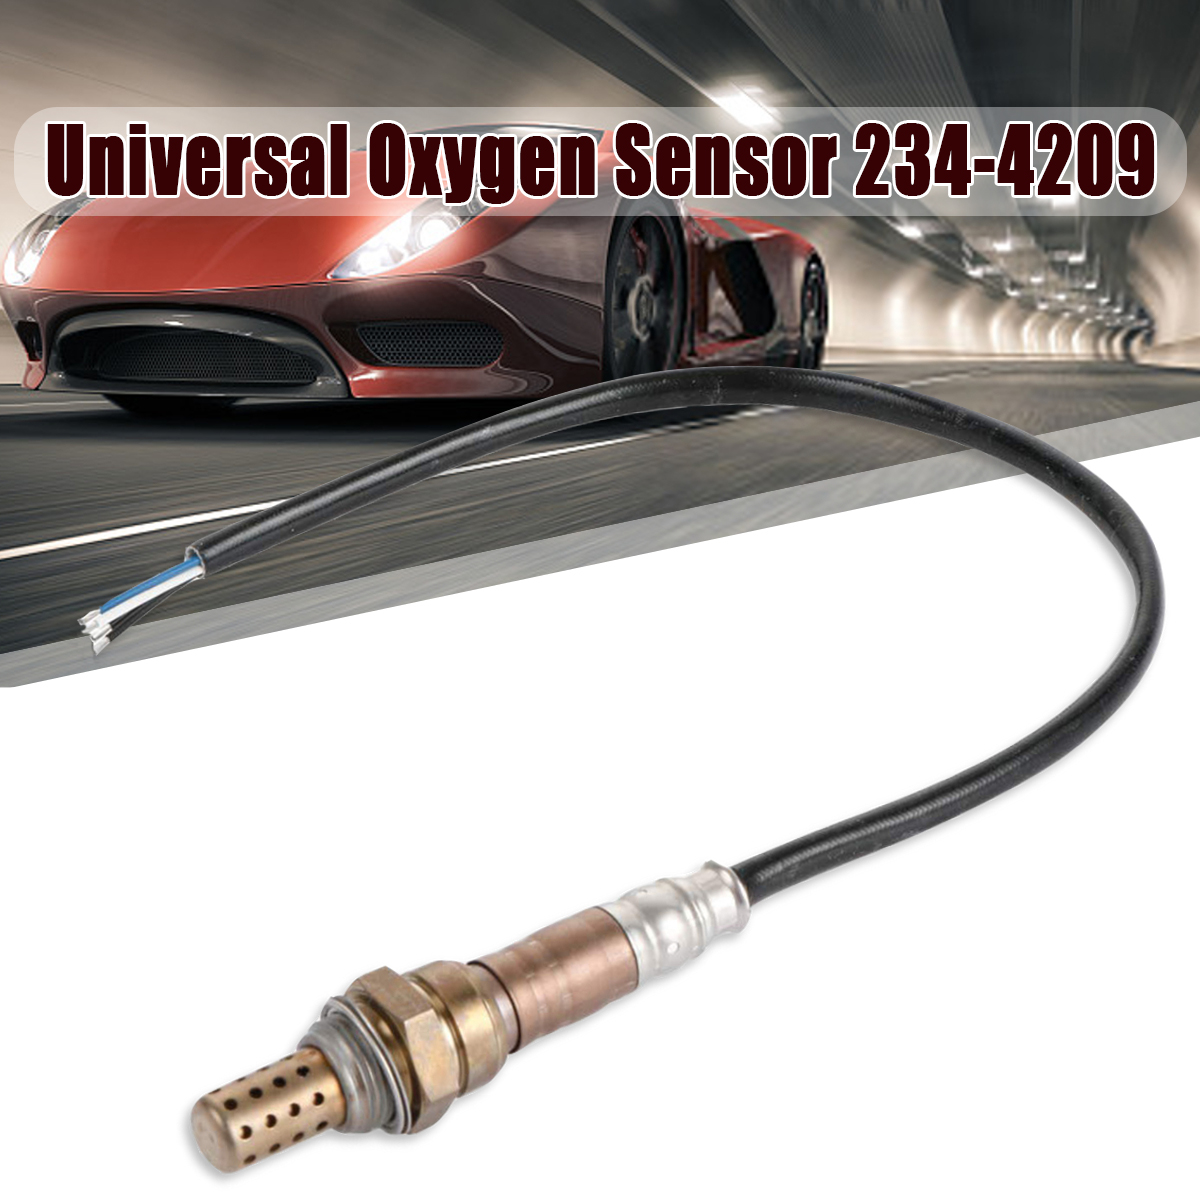 Oxygen-Sensor-Replacement-4-Wire-Universal-234-4209-For-Toyota-Camry-RAV4-Lexus-1536716-10